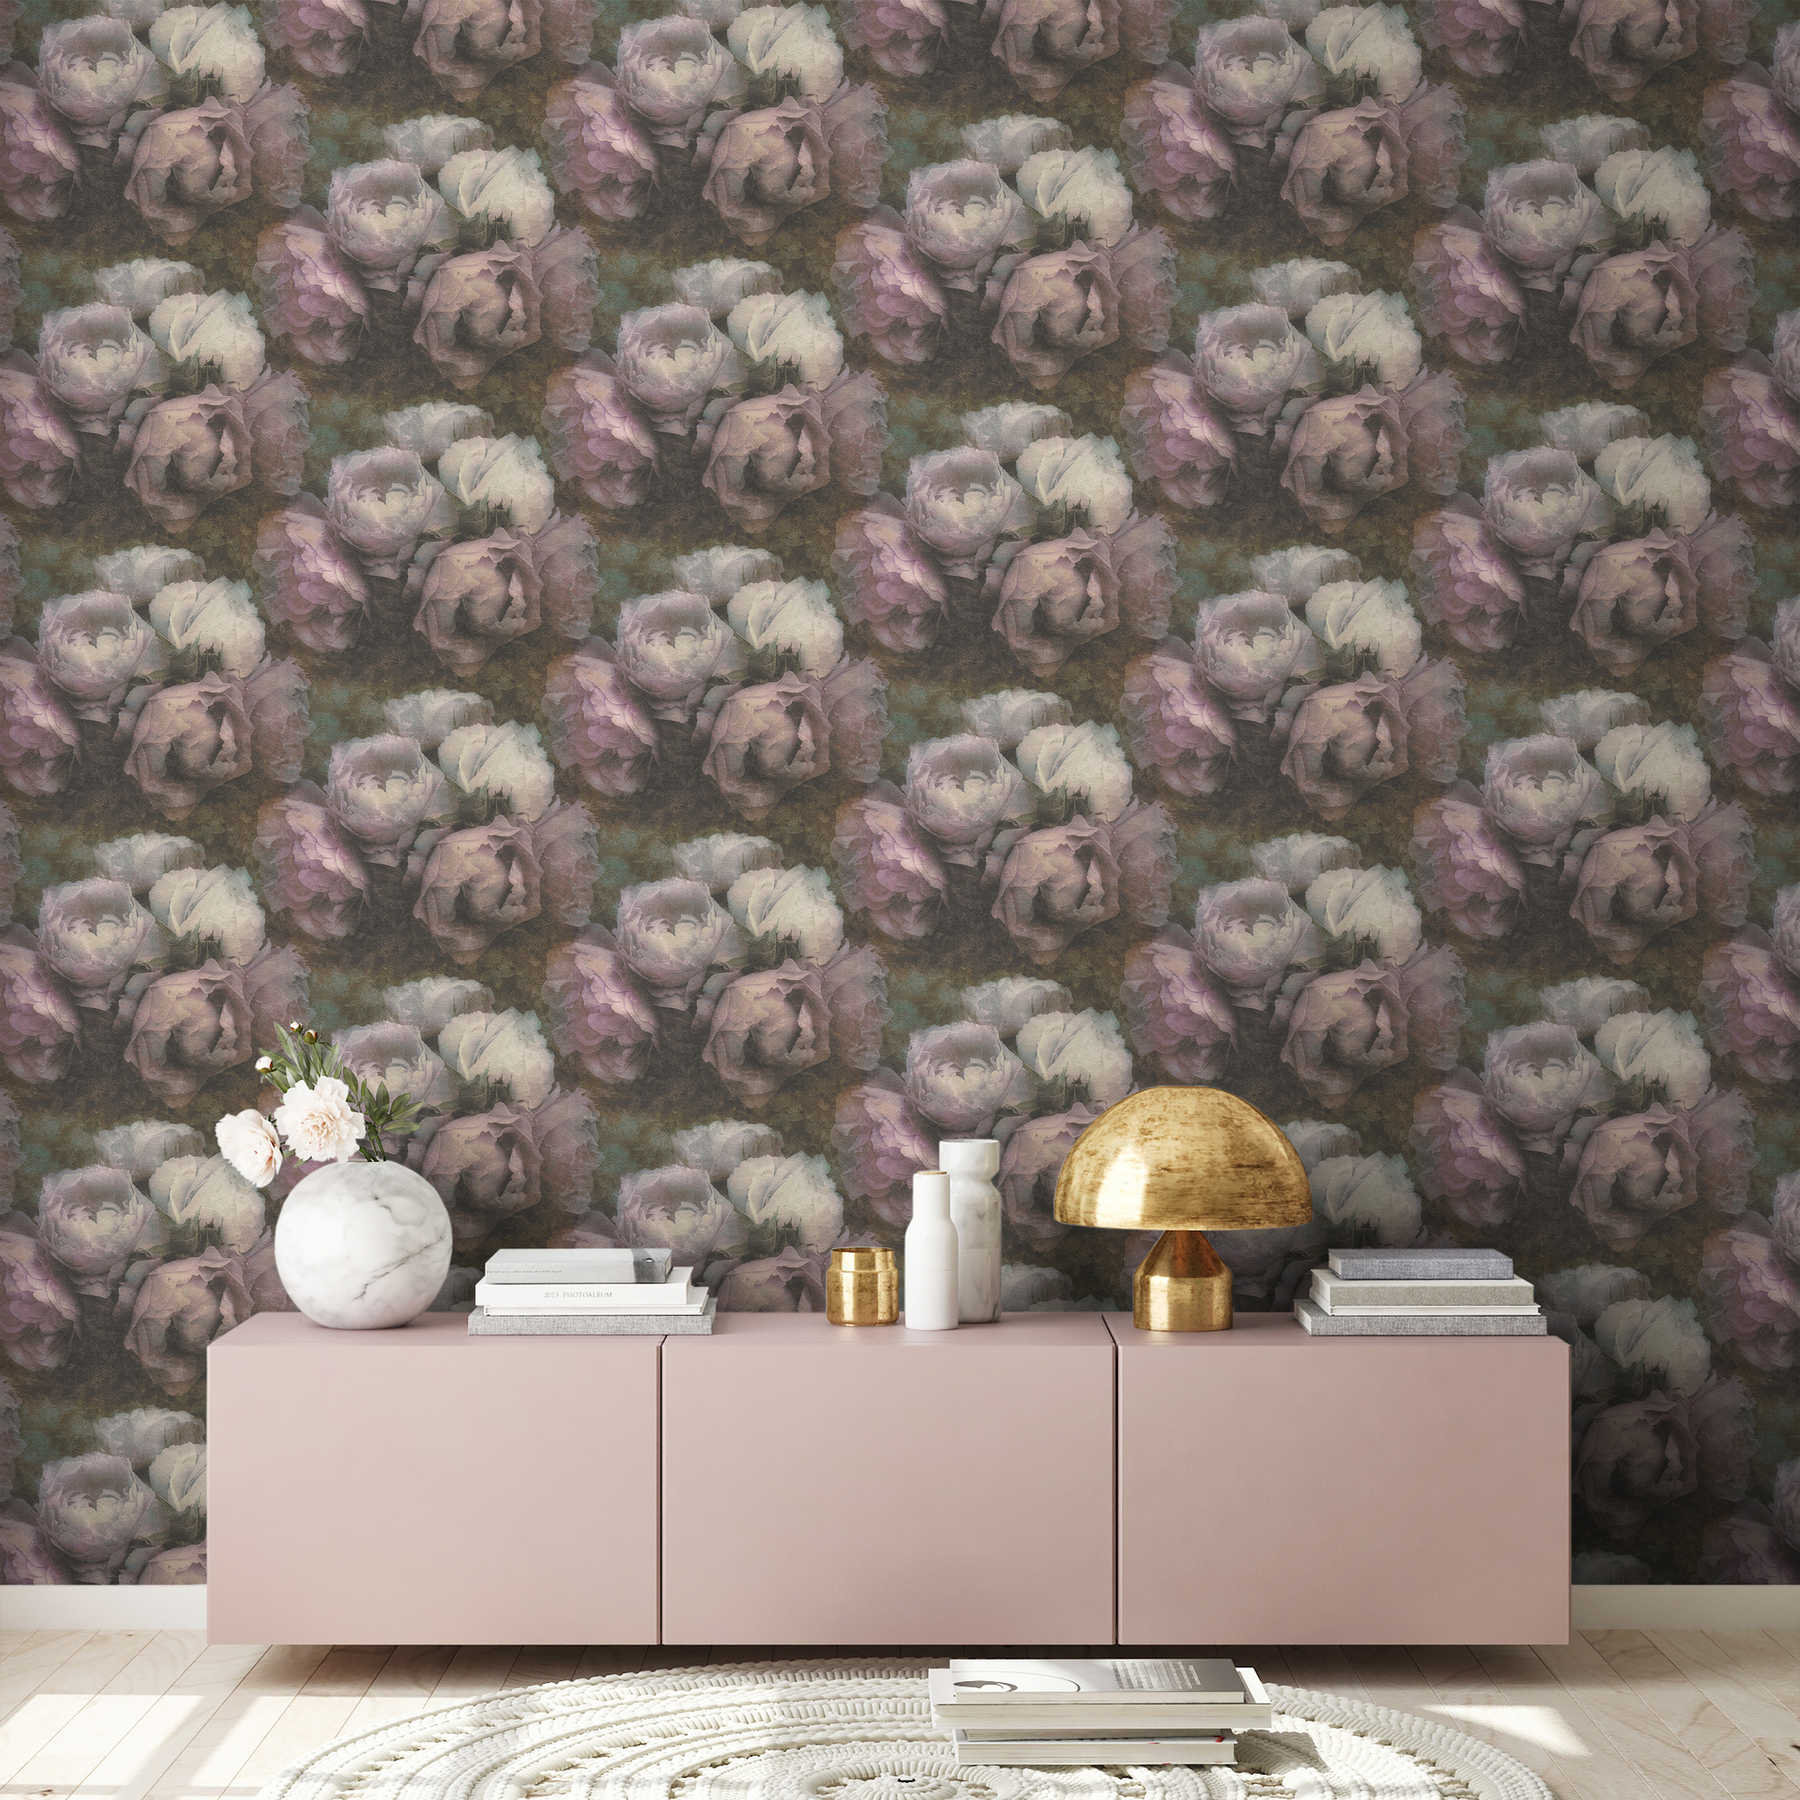             Vintage style wallpaper peonies - purple, grey, white
        